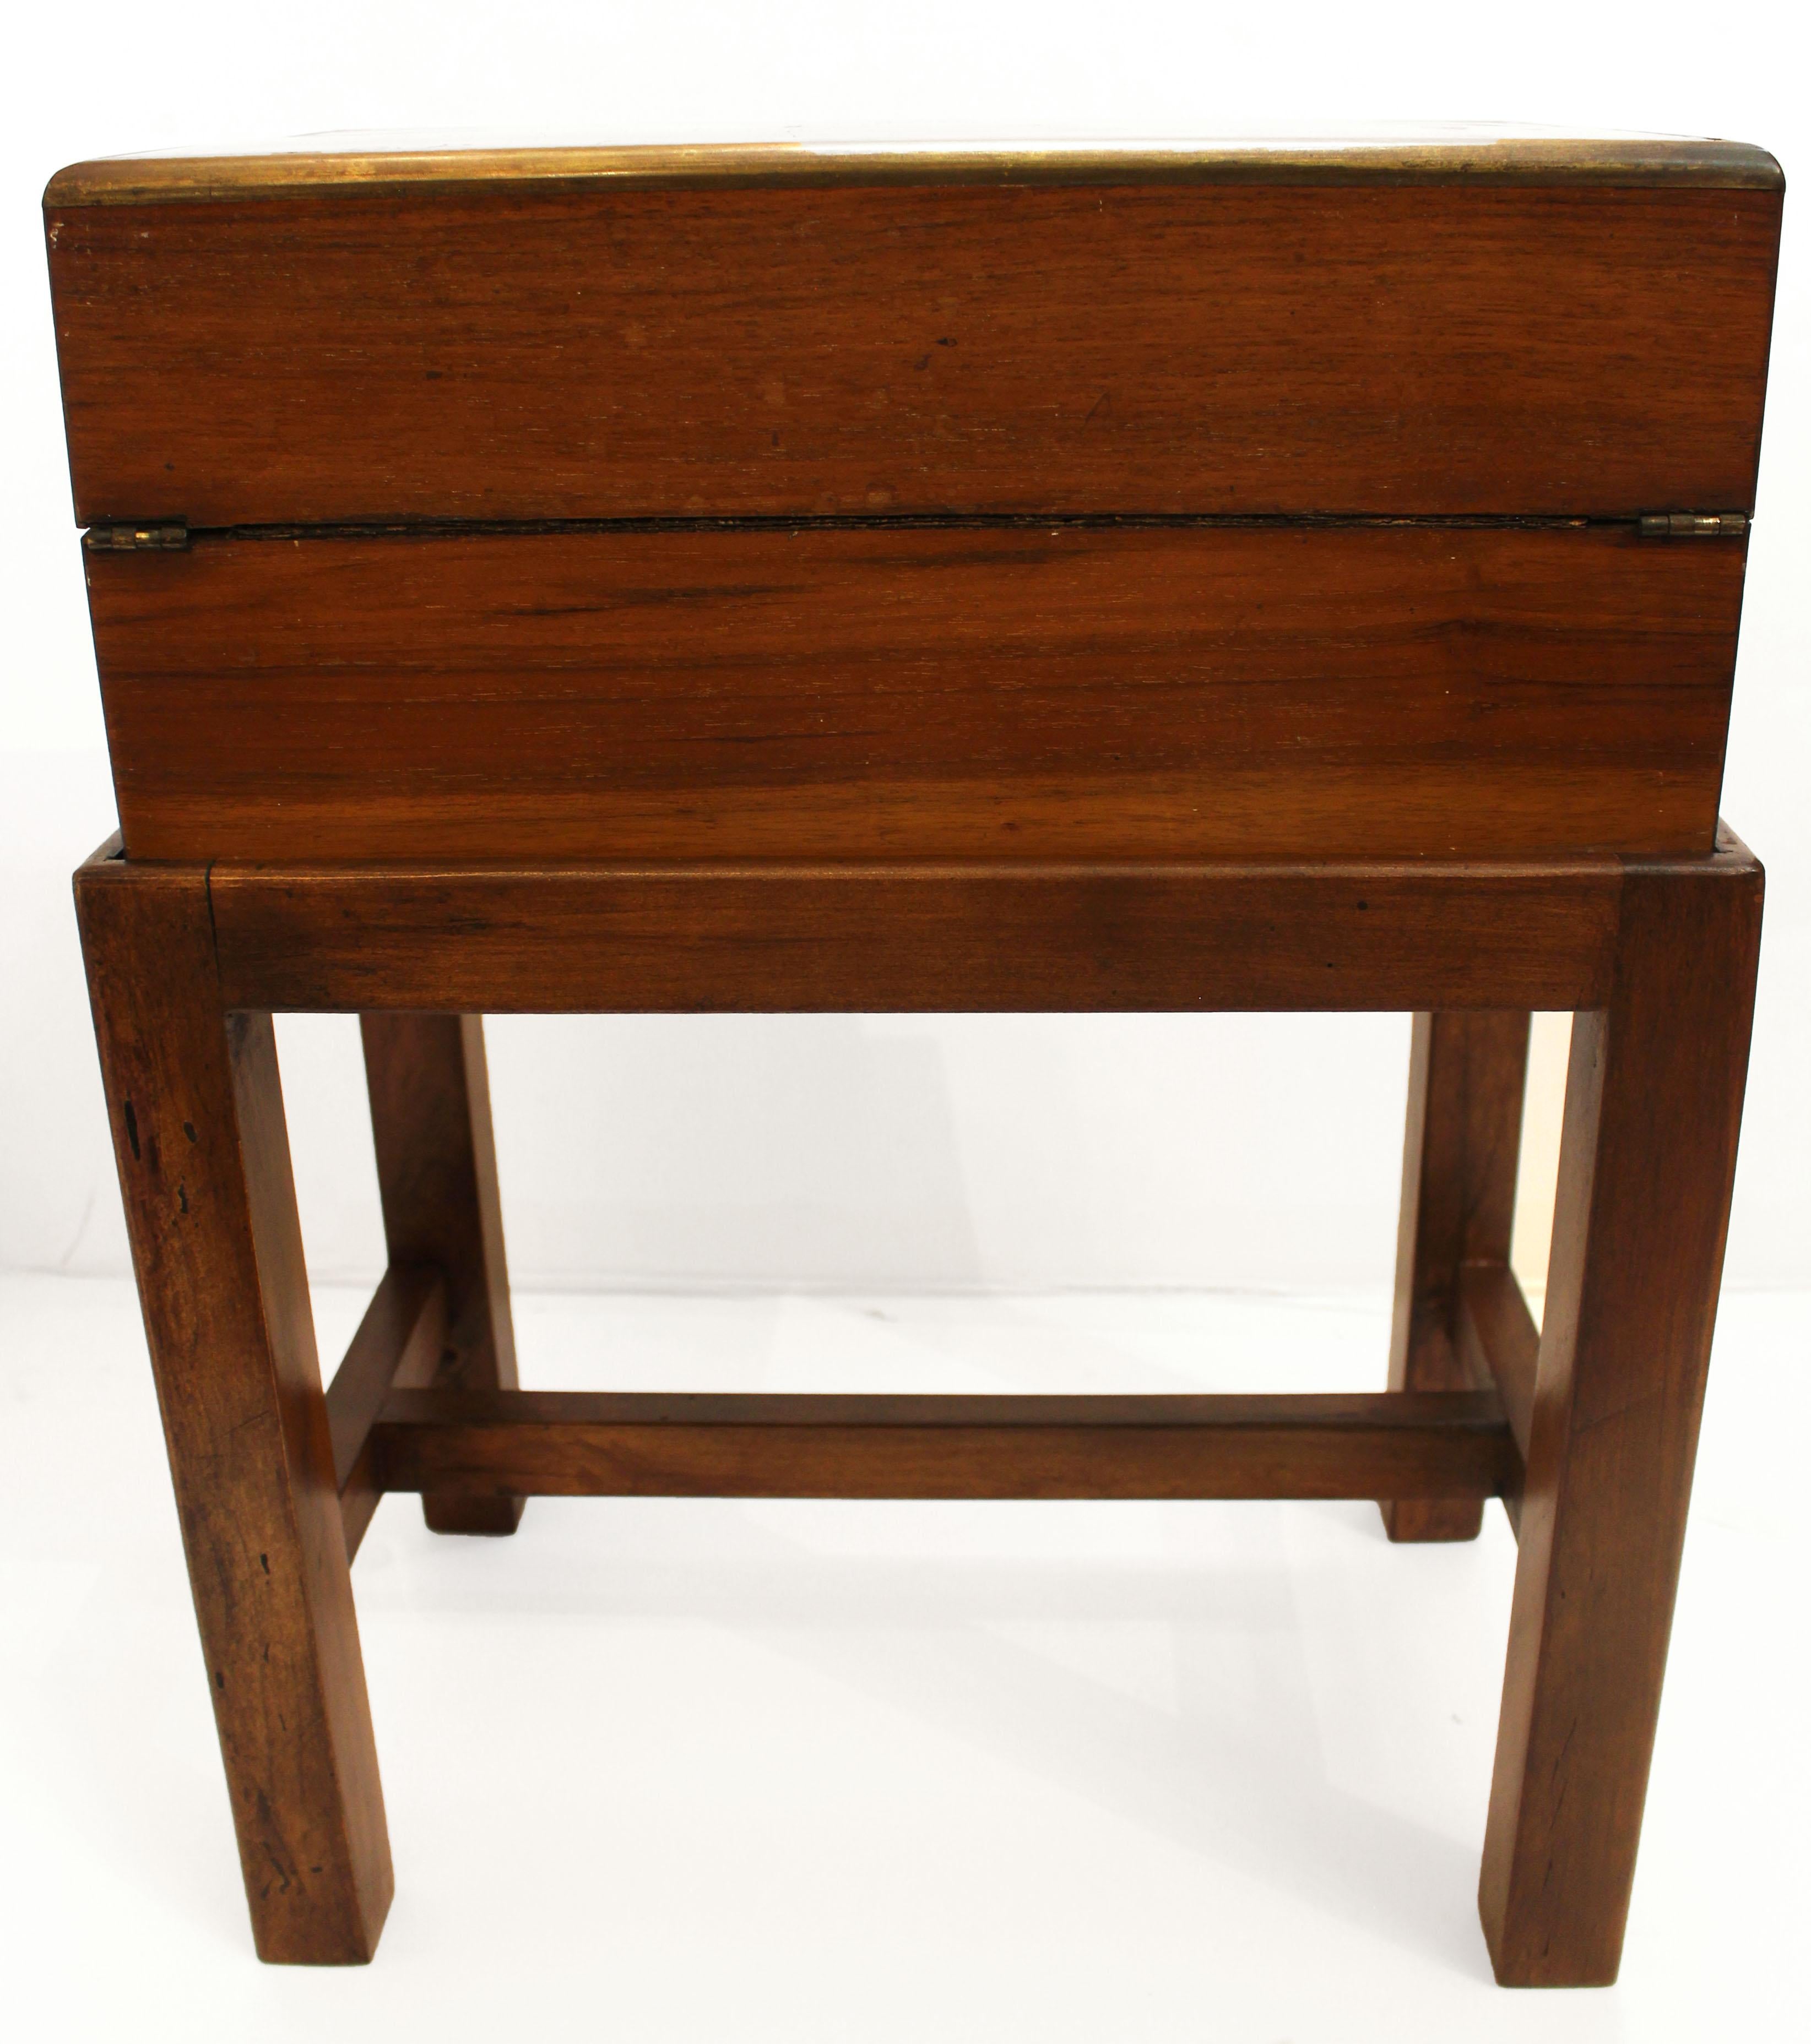 Mid-19th Century Circa 1860 English Lap Desk on Custom Side Table Stand